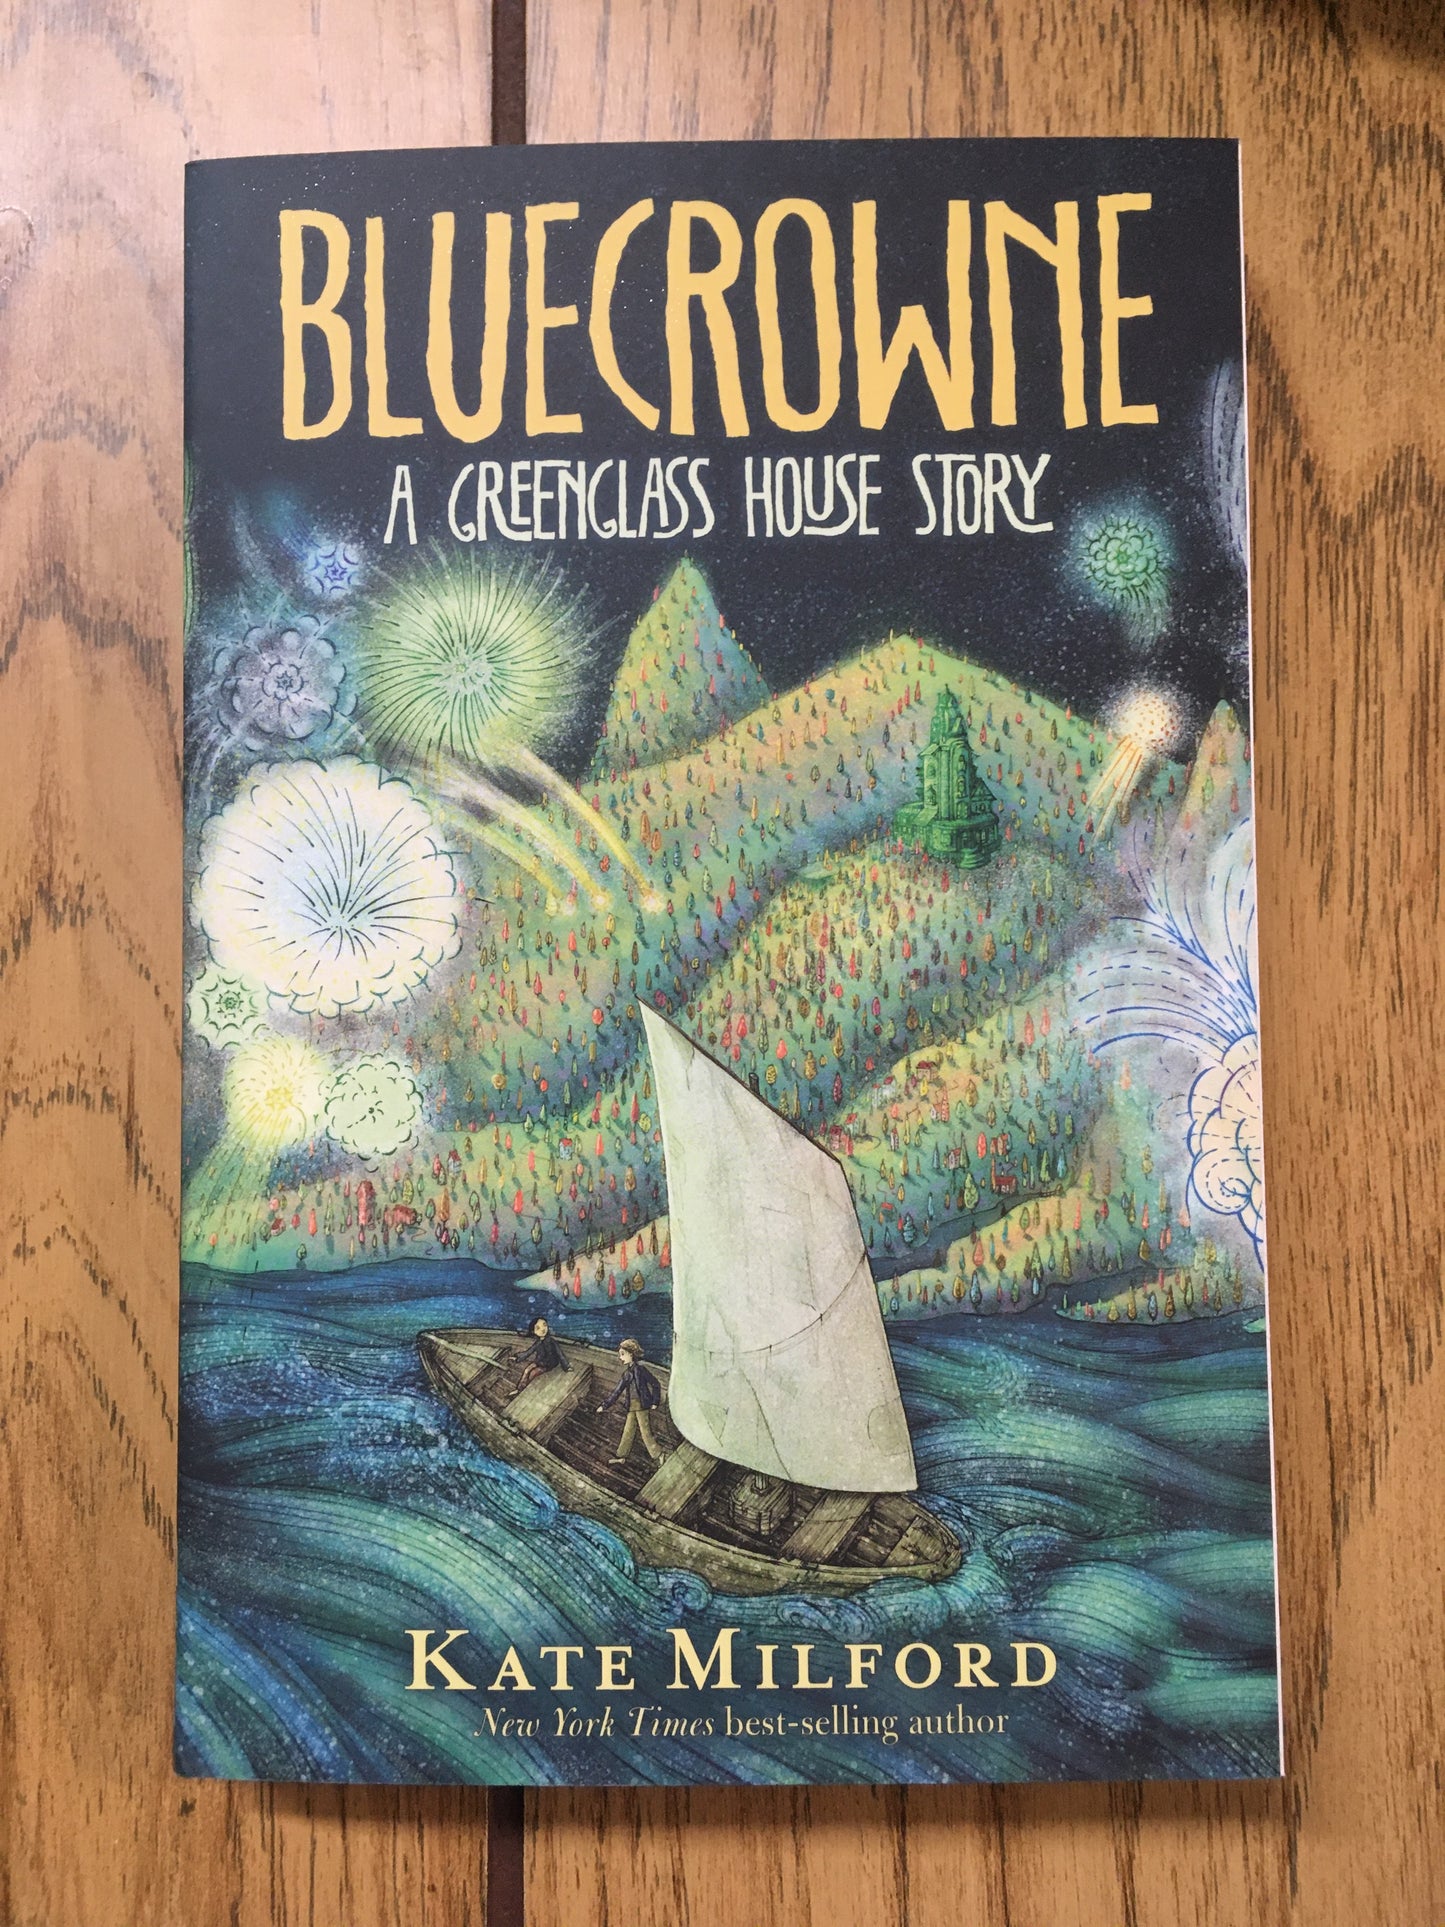 Bluecrowne: A Greenglass House Story (Prequel)